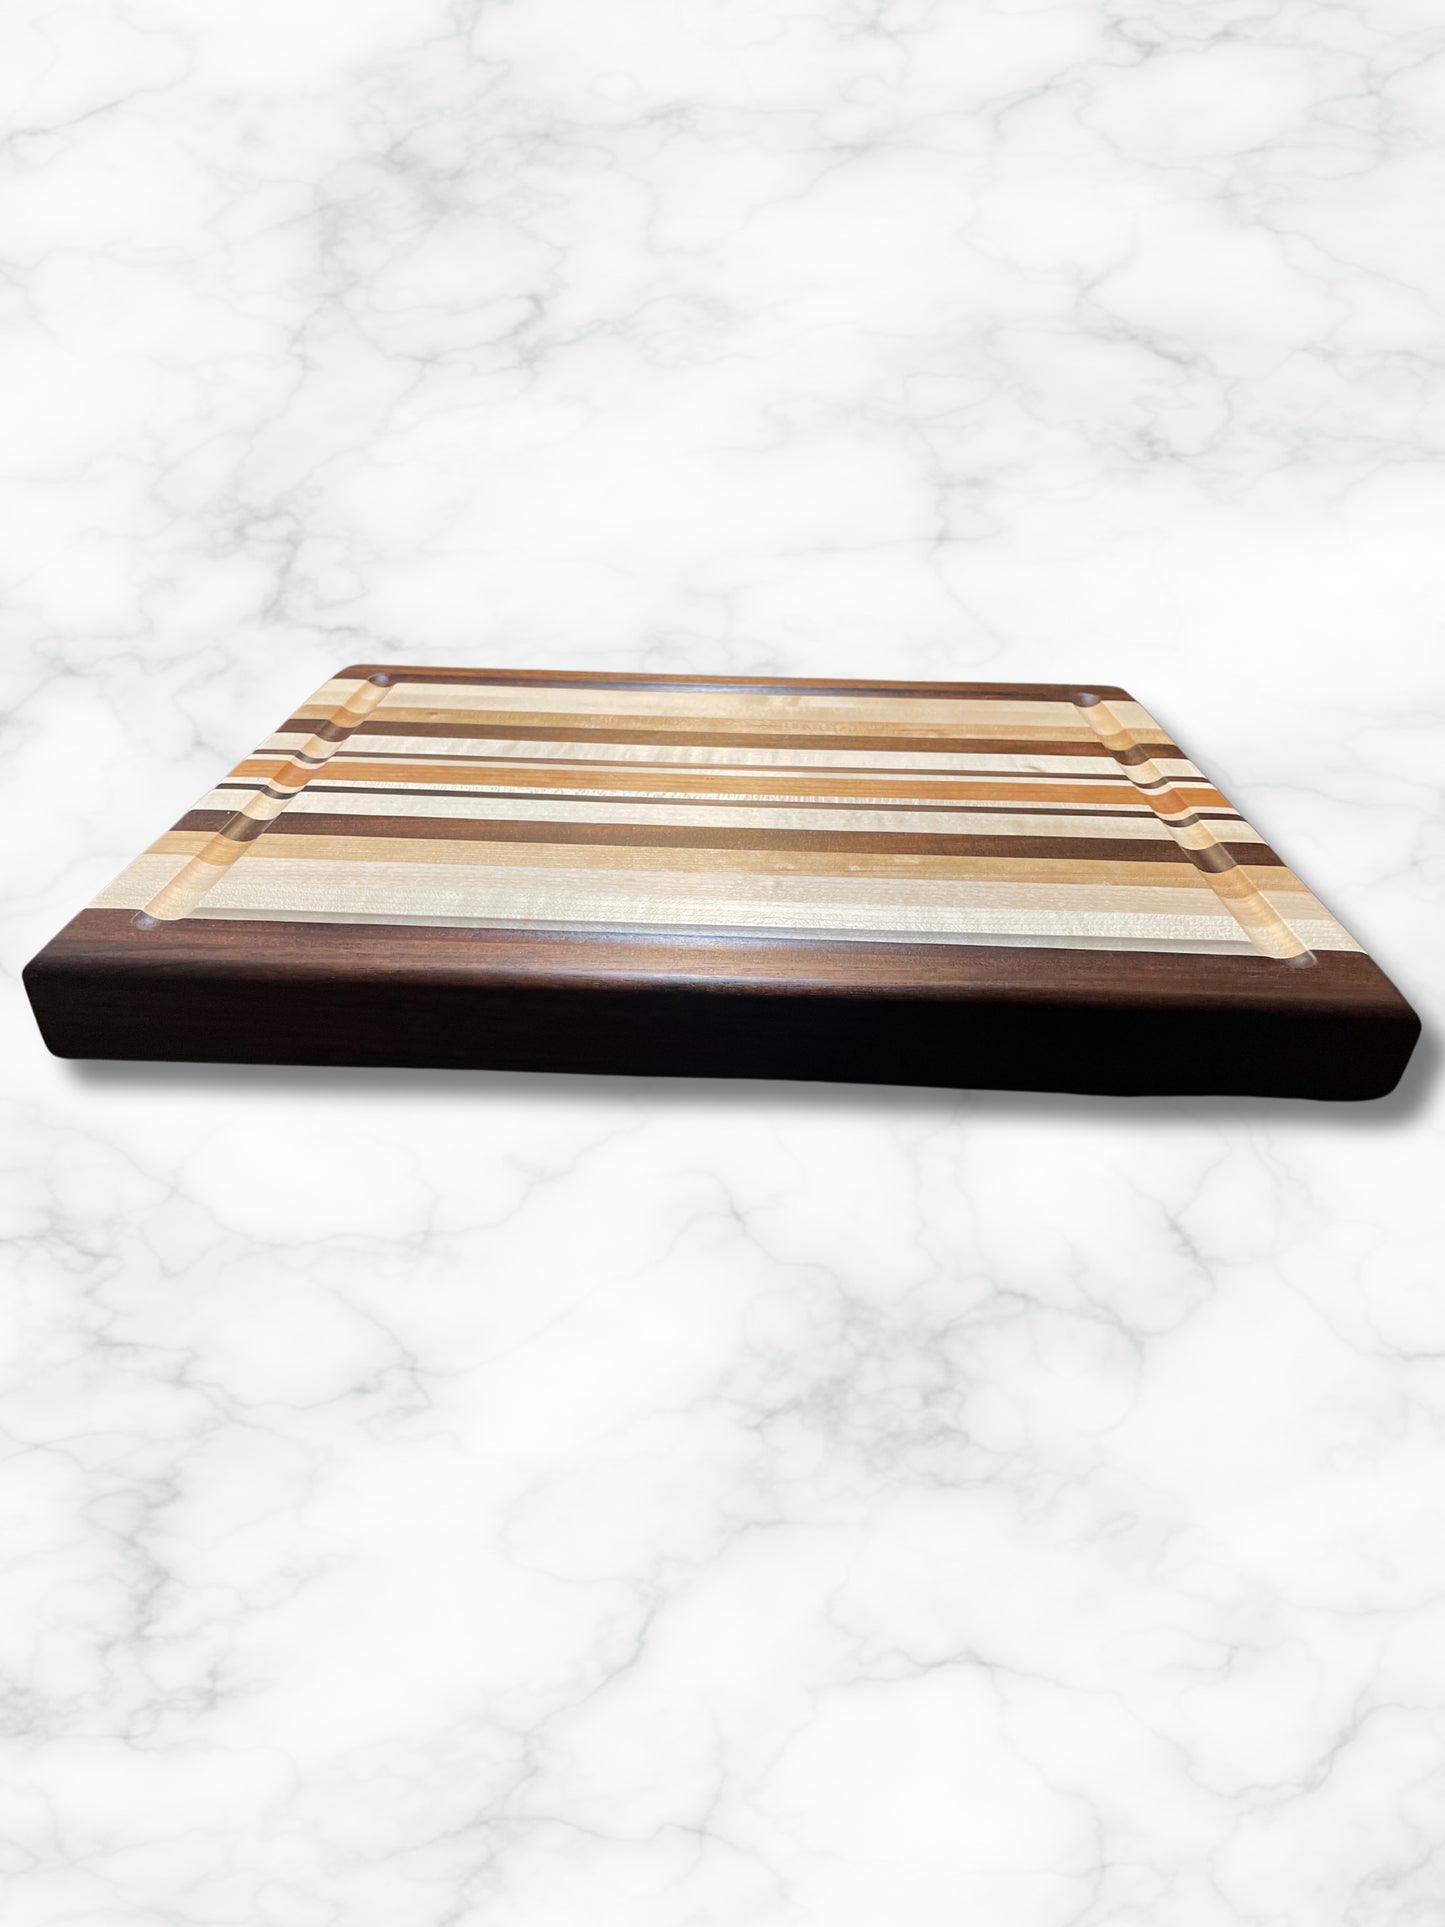 custom handmade edge grain cutting board wood walnut maple cherry, front view